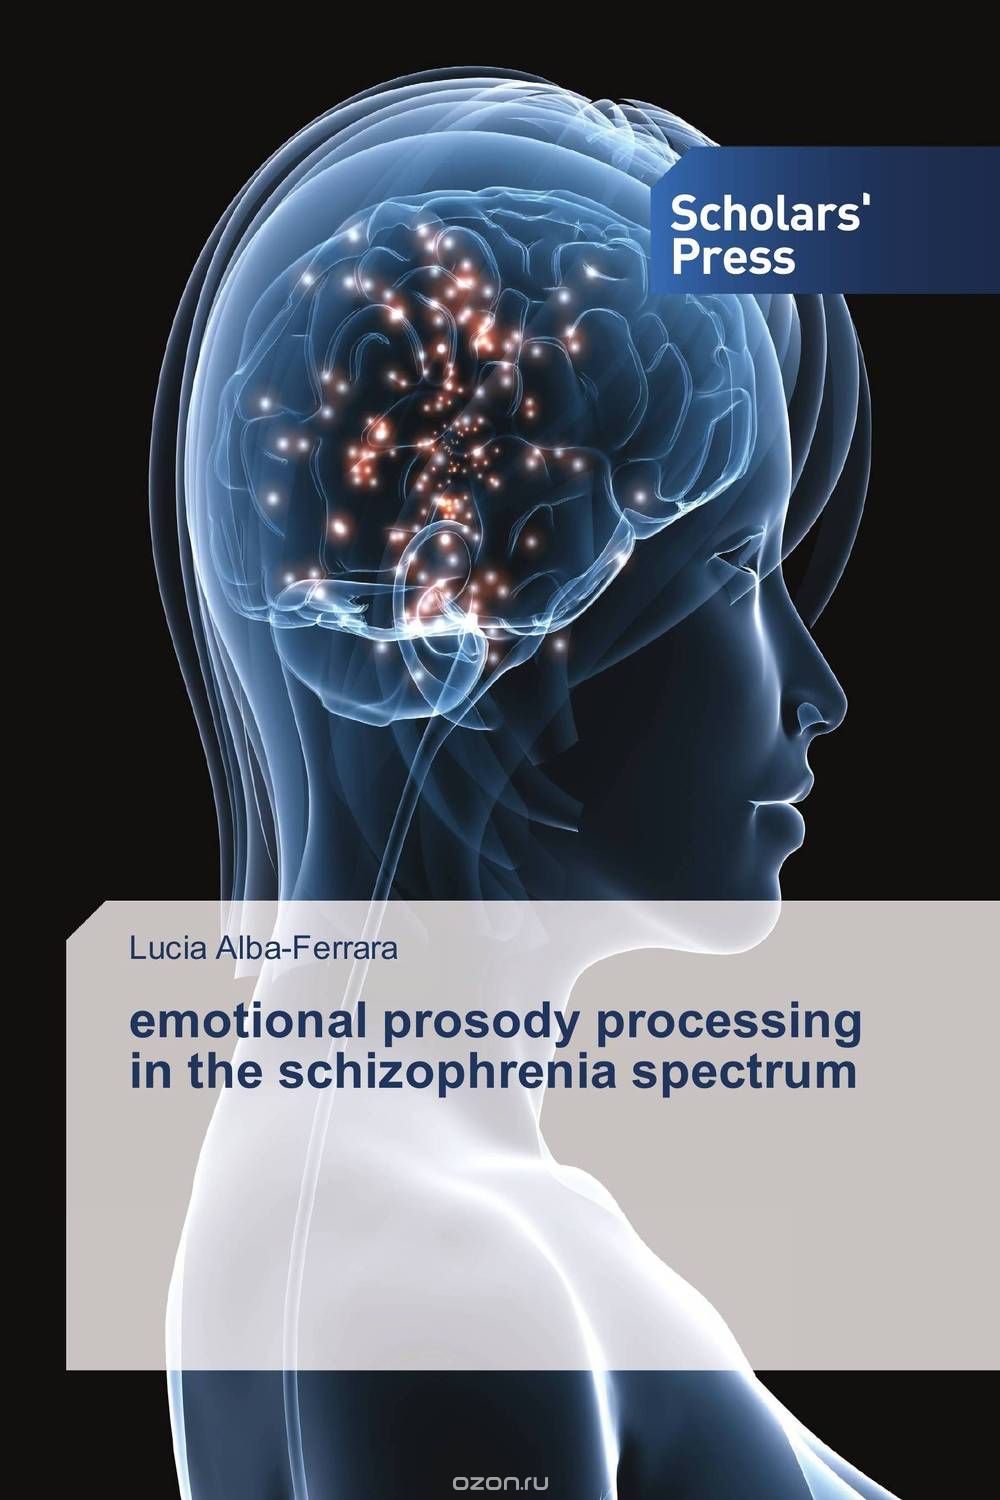 emotional prosody processing in the schizophrenia spectrum